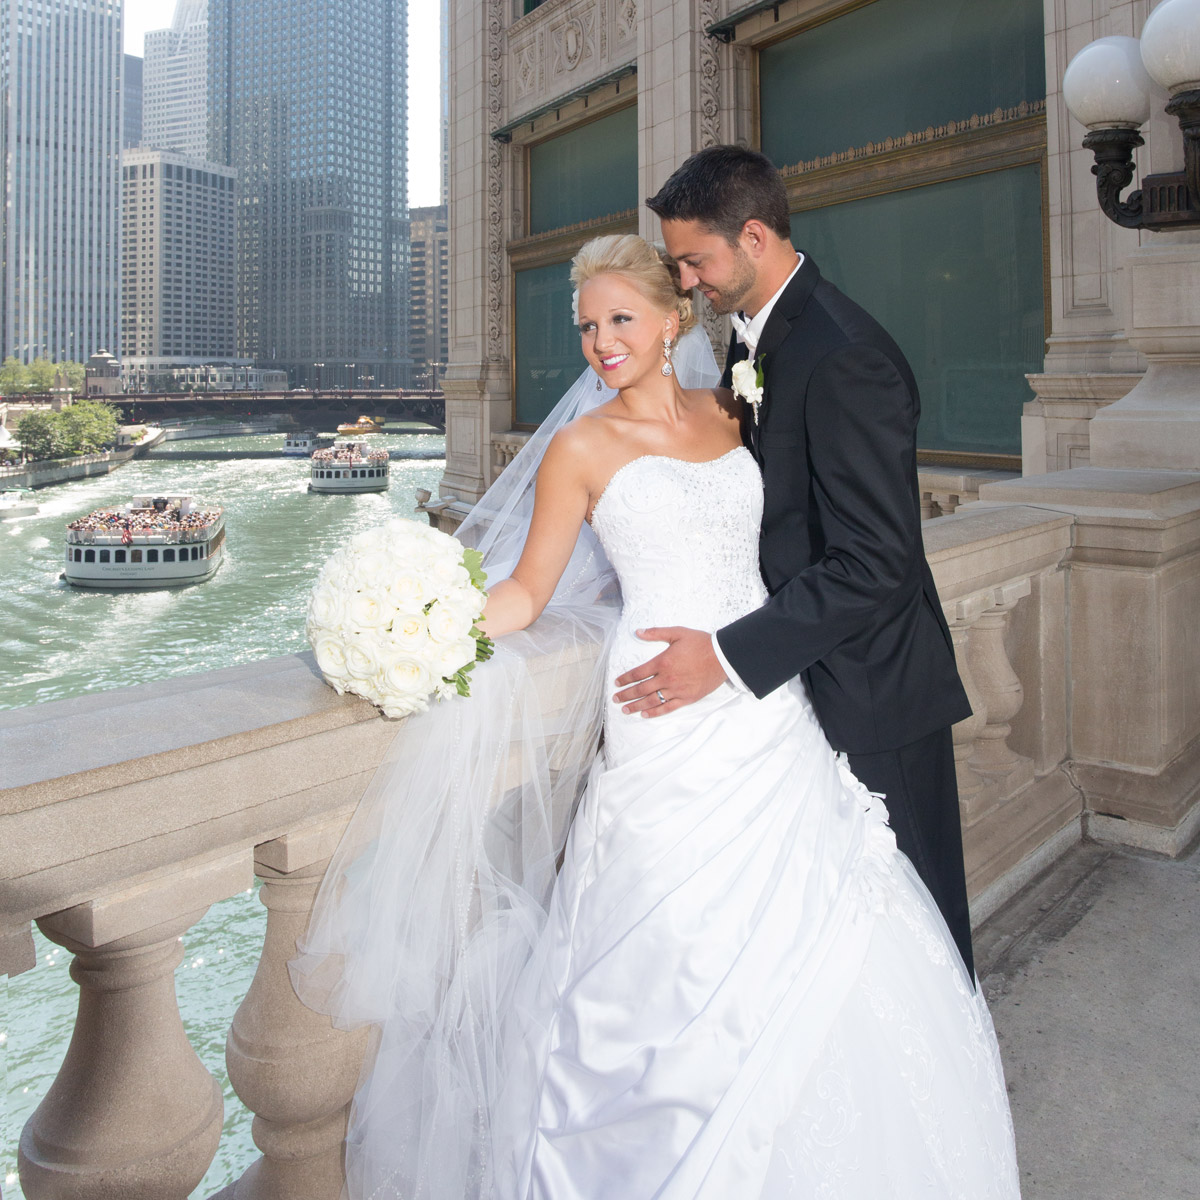 Best Chicago Wedding Venues Photos